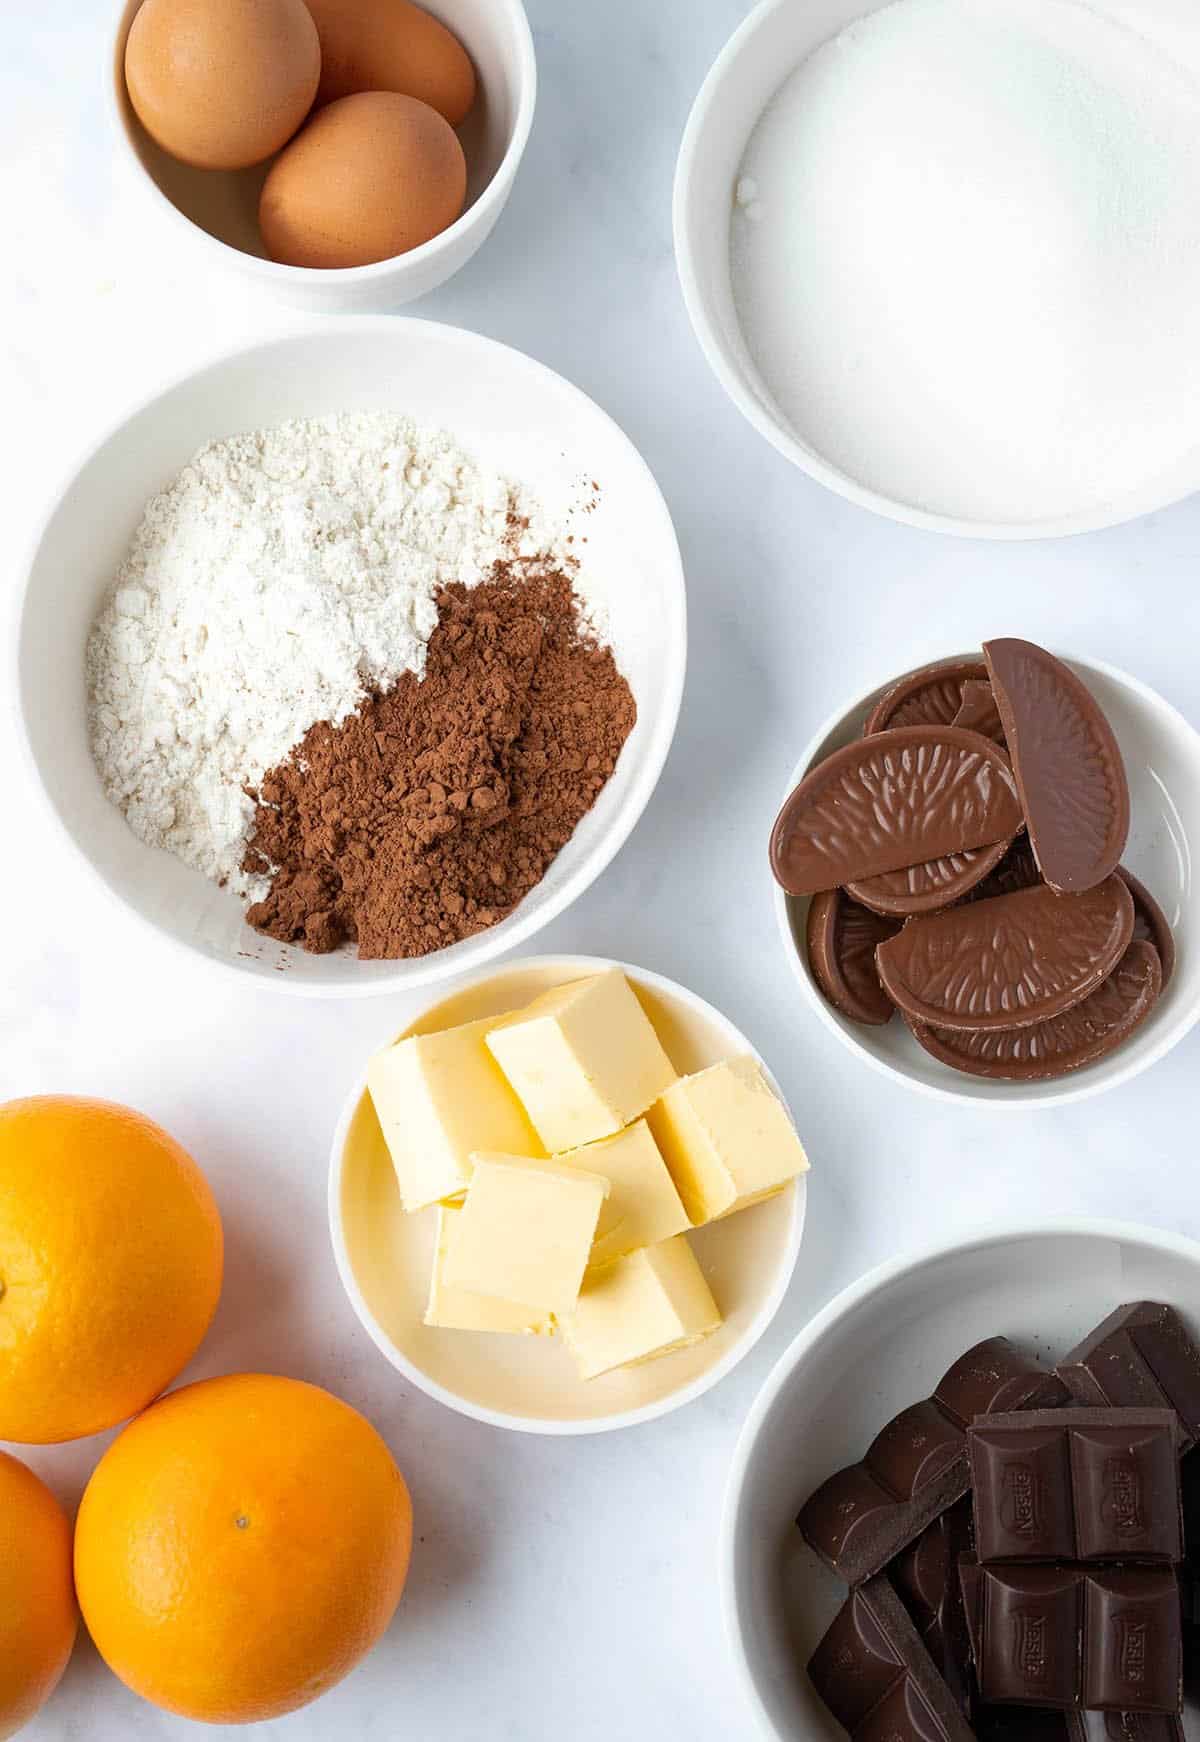 All the ingredients needed to make Chocolate Orange Brownies.